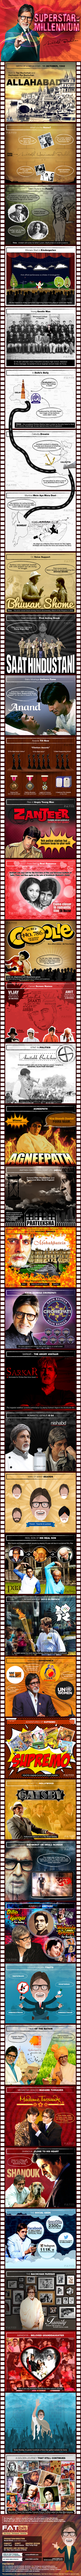 Amitabh Bachchan Infographic